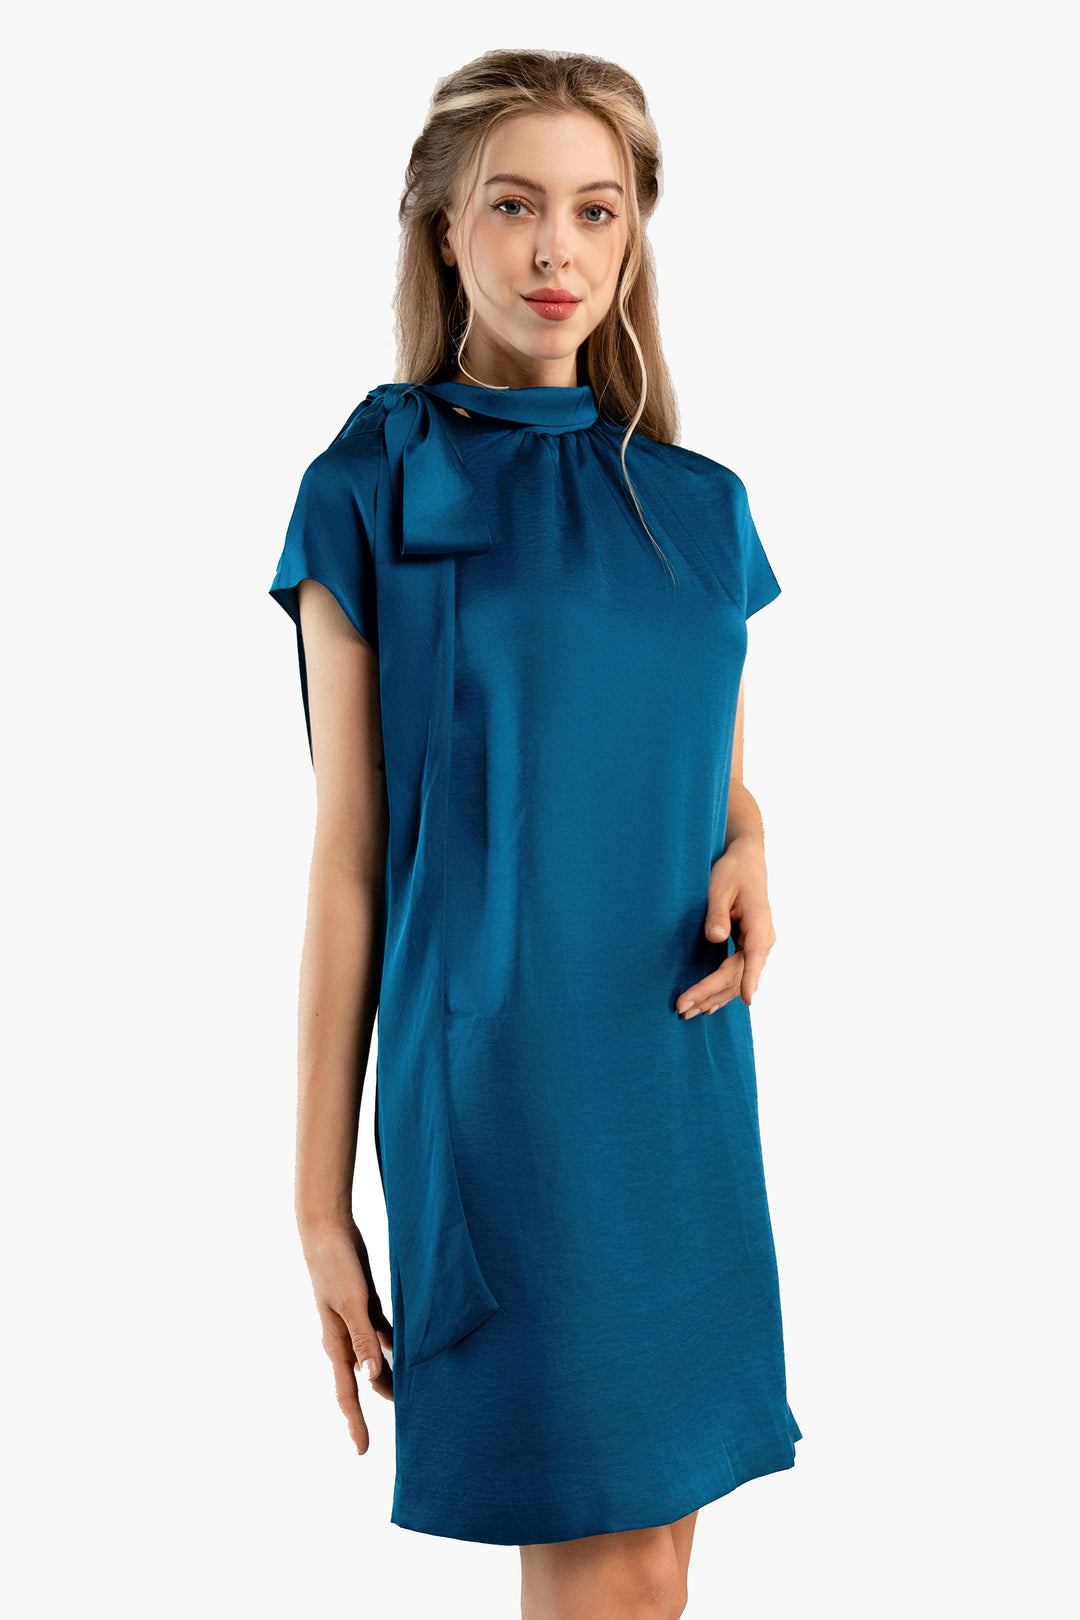 Blue satin shift dress with bow on shoulder